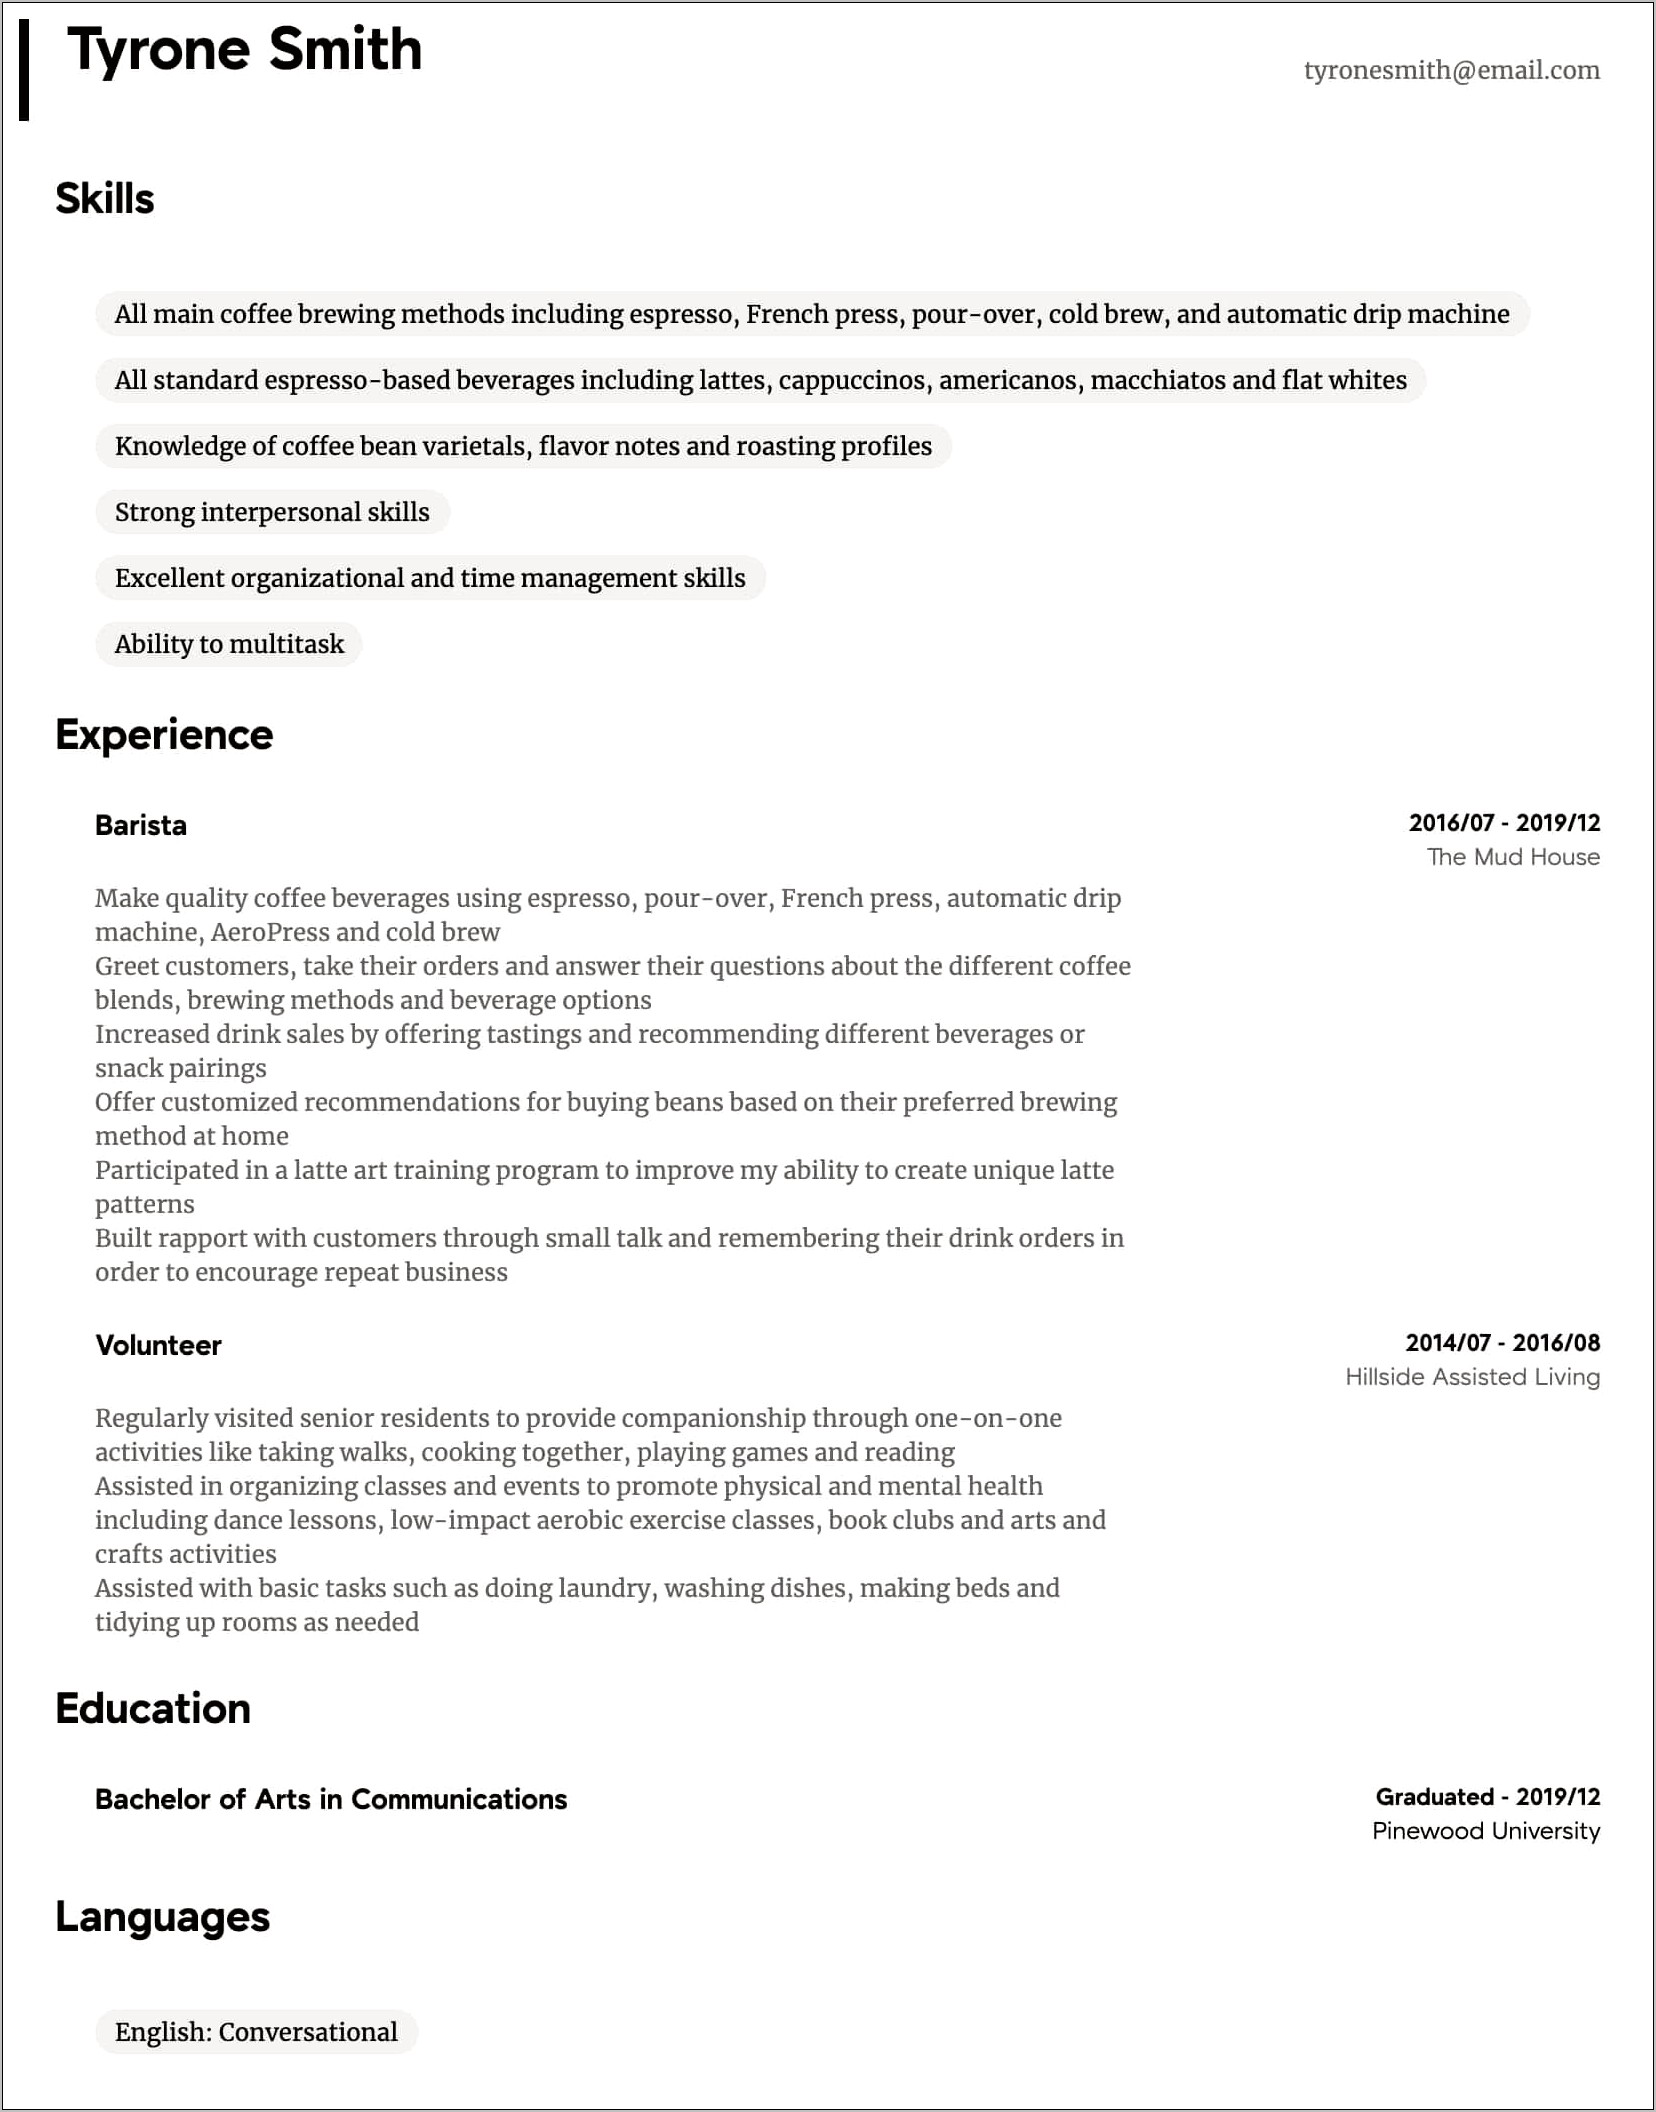 Resume Description For Brewery Job